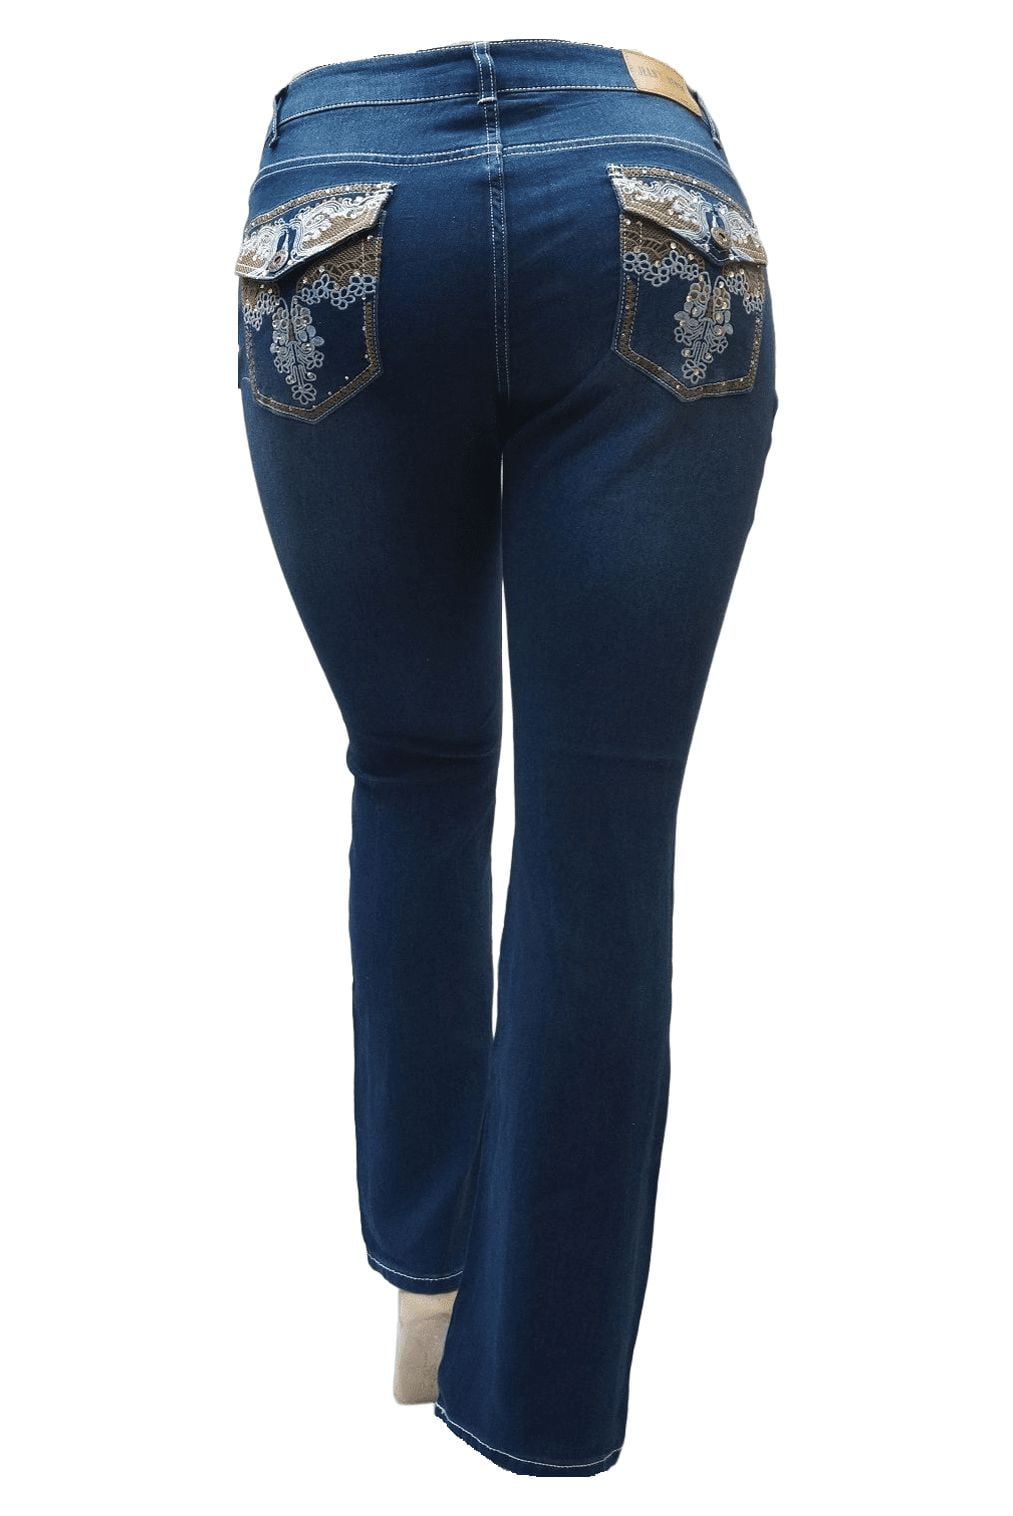 Jack David Women's Plus Size Ripped Destroy Blue Denim Roll up Distressed  Jeans Pants 